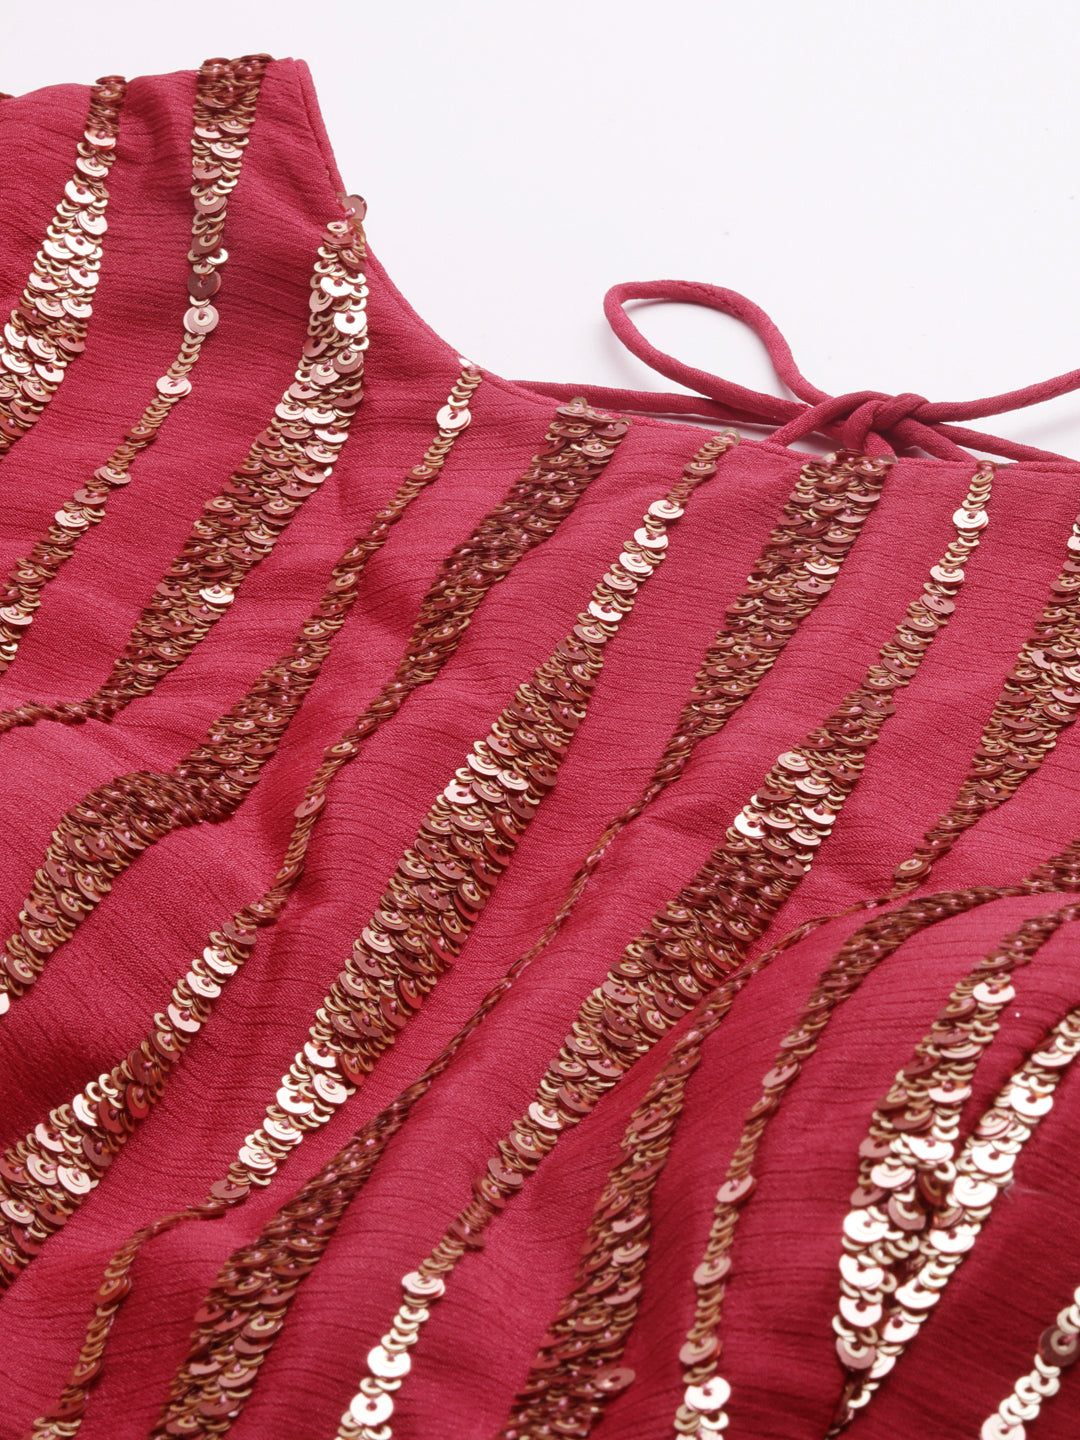 Women's Pink Net Sequince Work Lehenga & Blouse, Dupatta - Royal Dwells